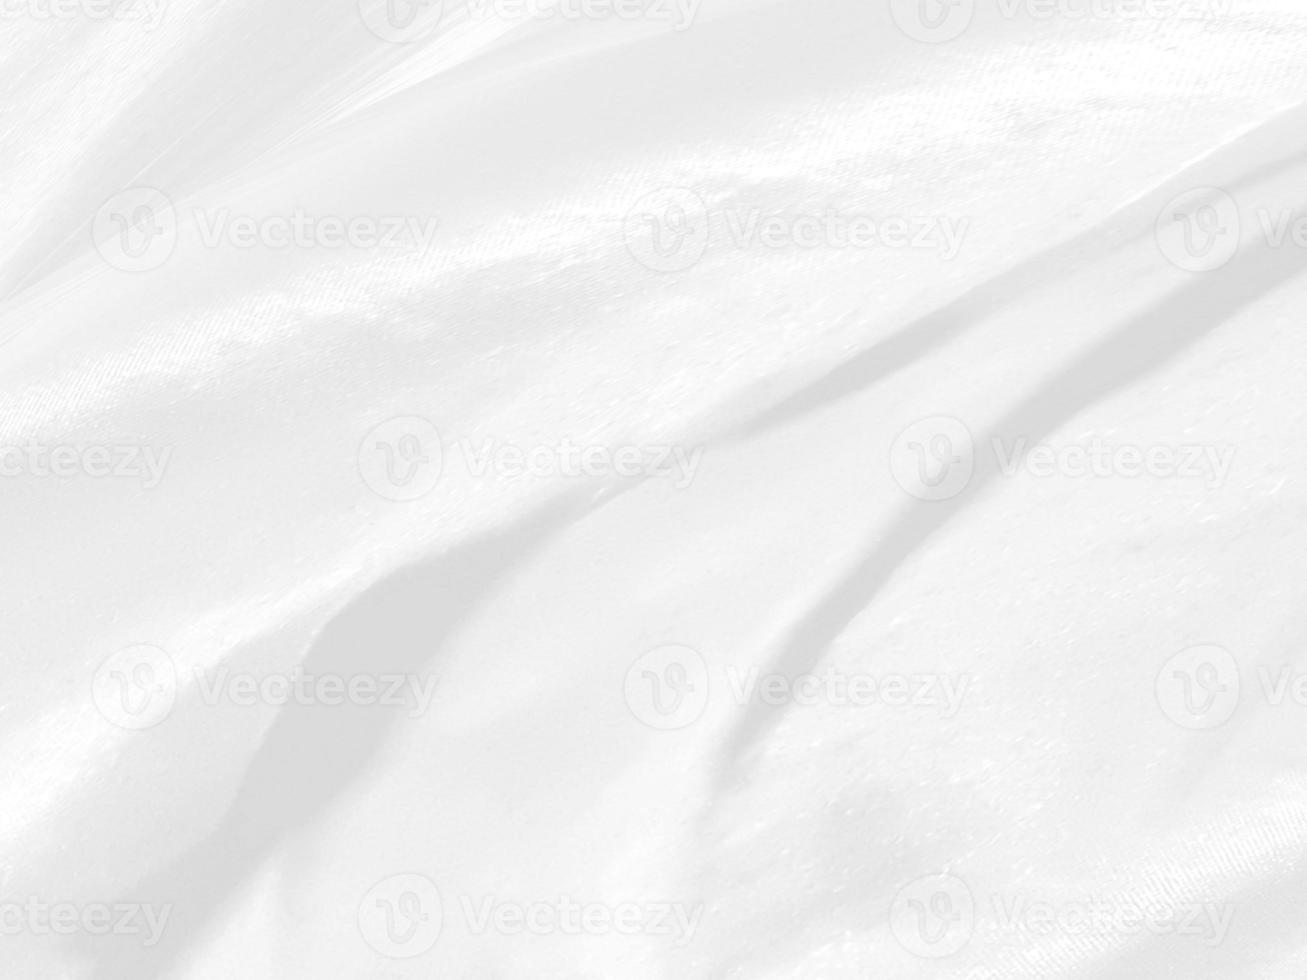 bela moda limpa tecido macio abstrato forma de curva suave decorativa têxtil fundo branco foto